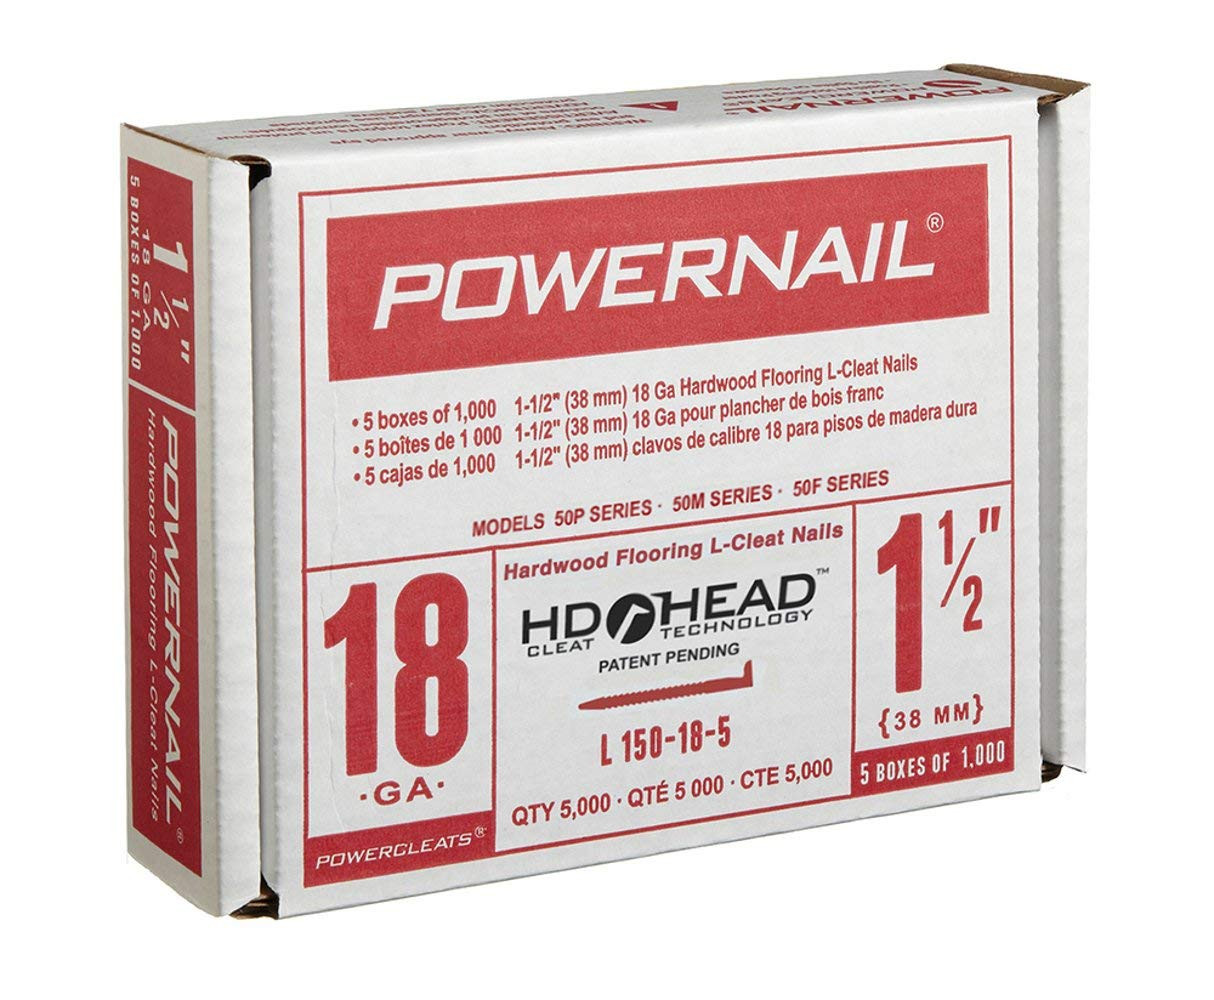 5 16 Hardwood Floor Nailer Of Powernail 18 Gage 1 1 2 Cleats Box Of 5 000 Power Flooring within Box Of 5 000 Power Flooring Nailers Amazon Com